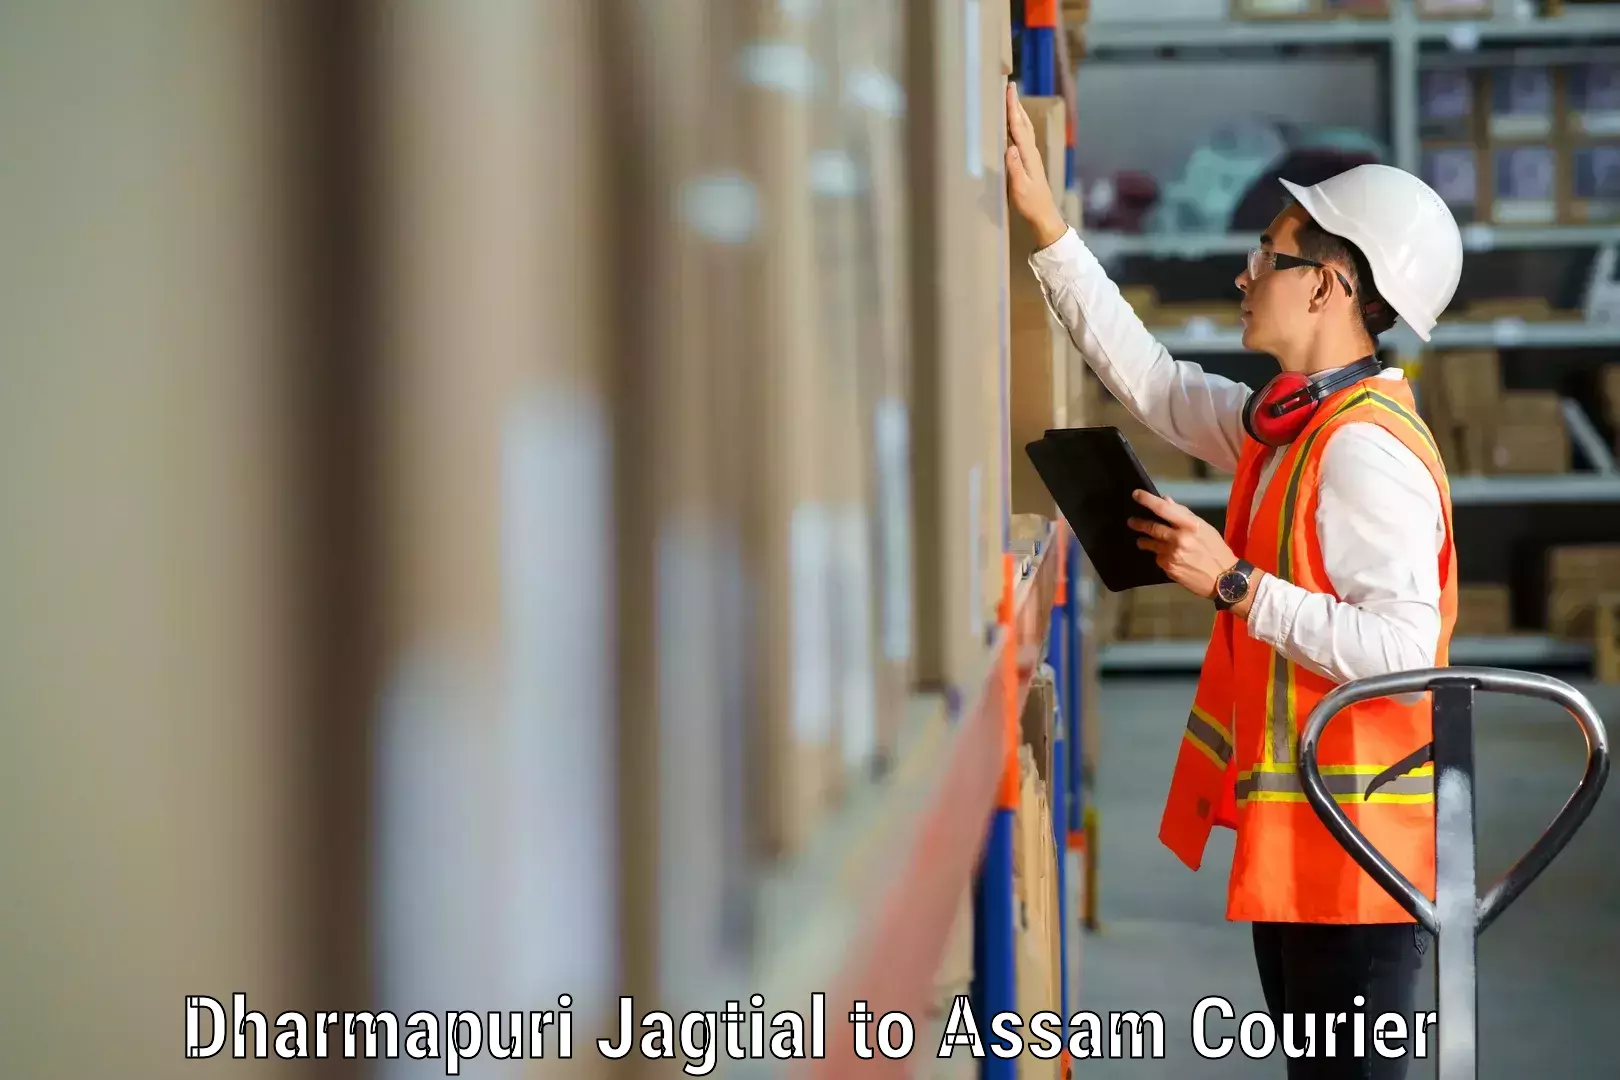 Professional moving company Dharmapuri Jagtial to Assam